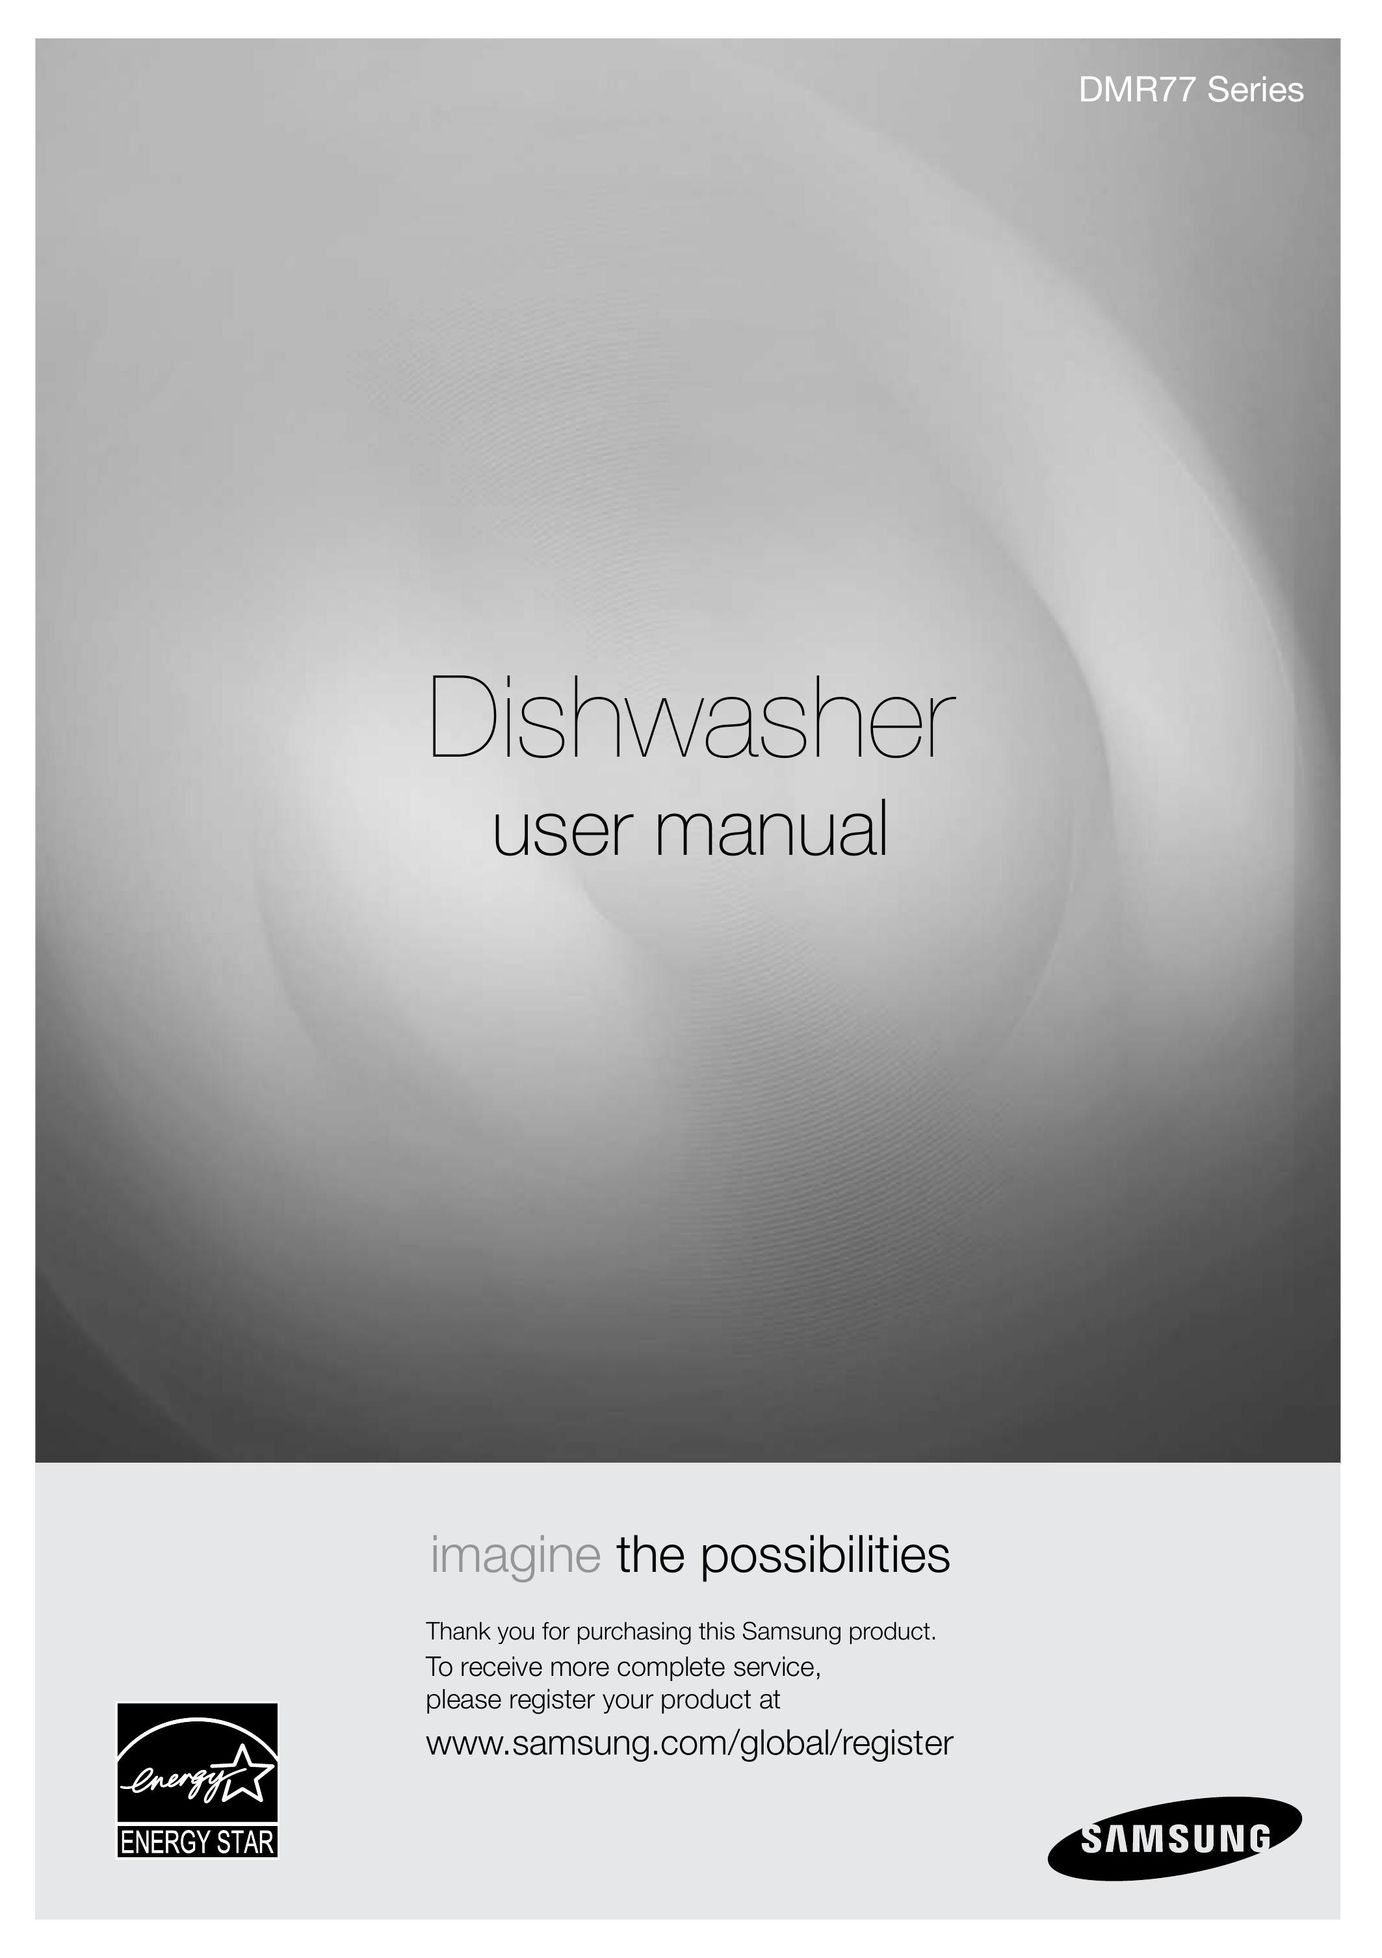 Samsung DMRLHB Dishwasher User Manual